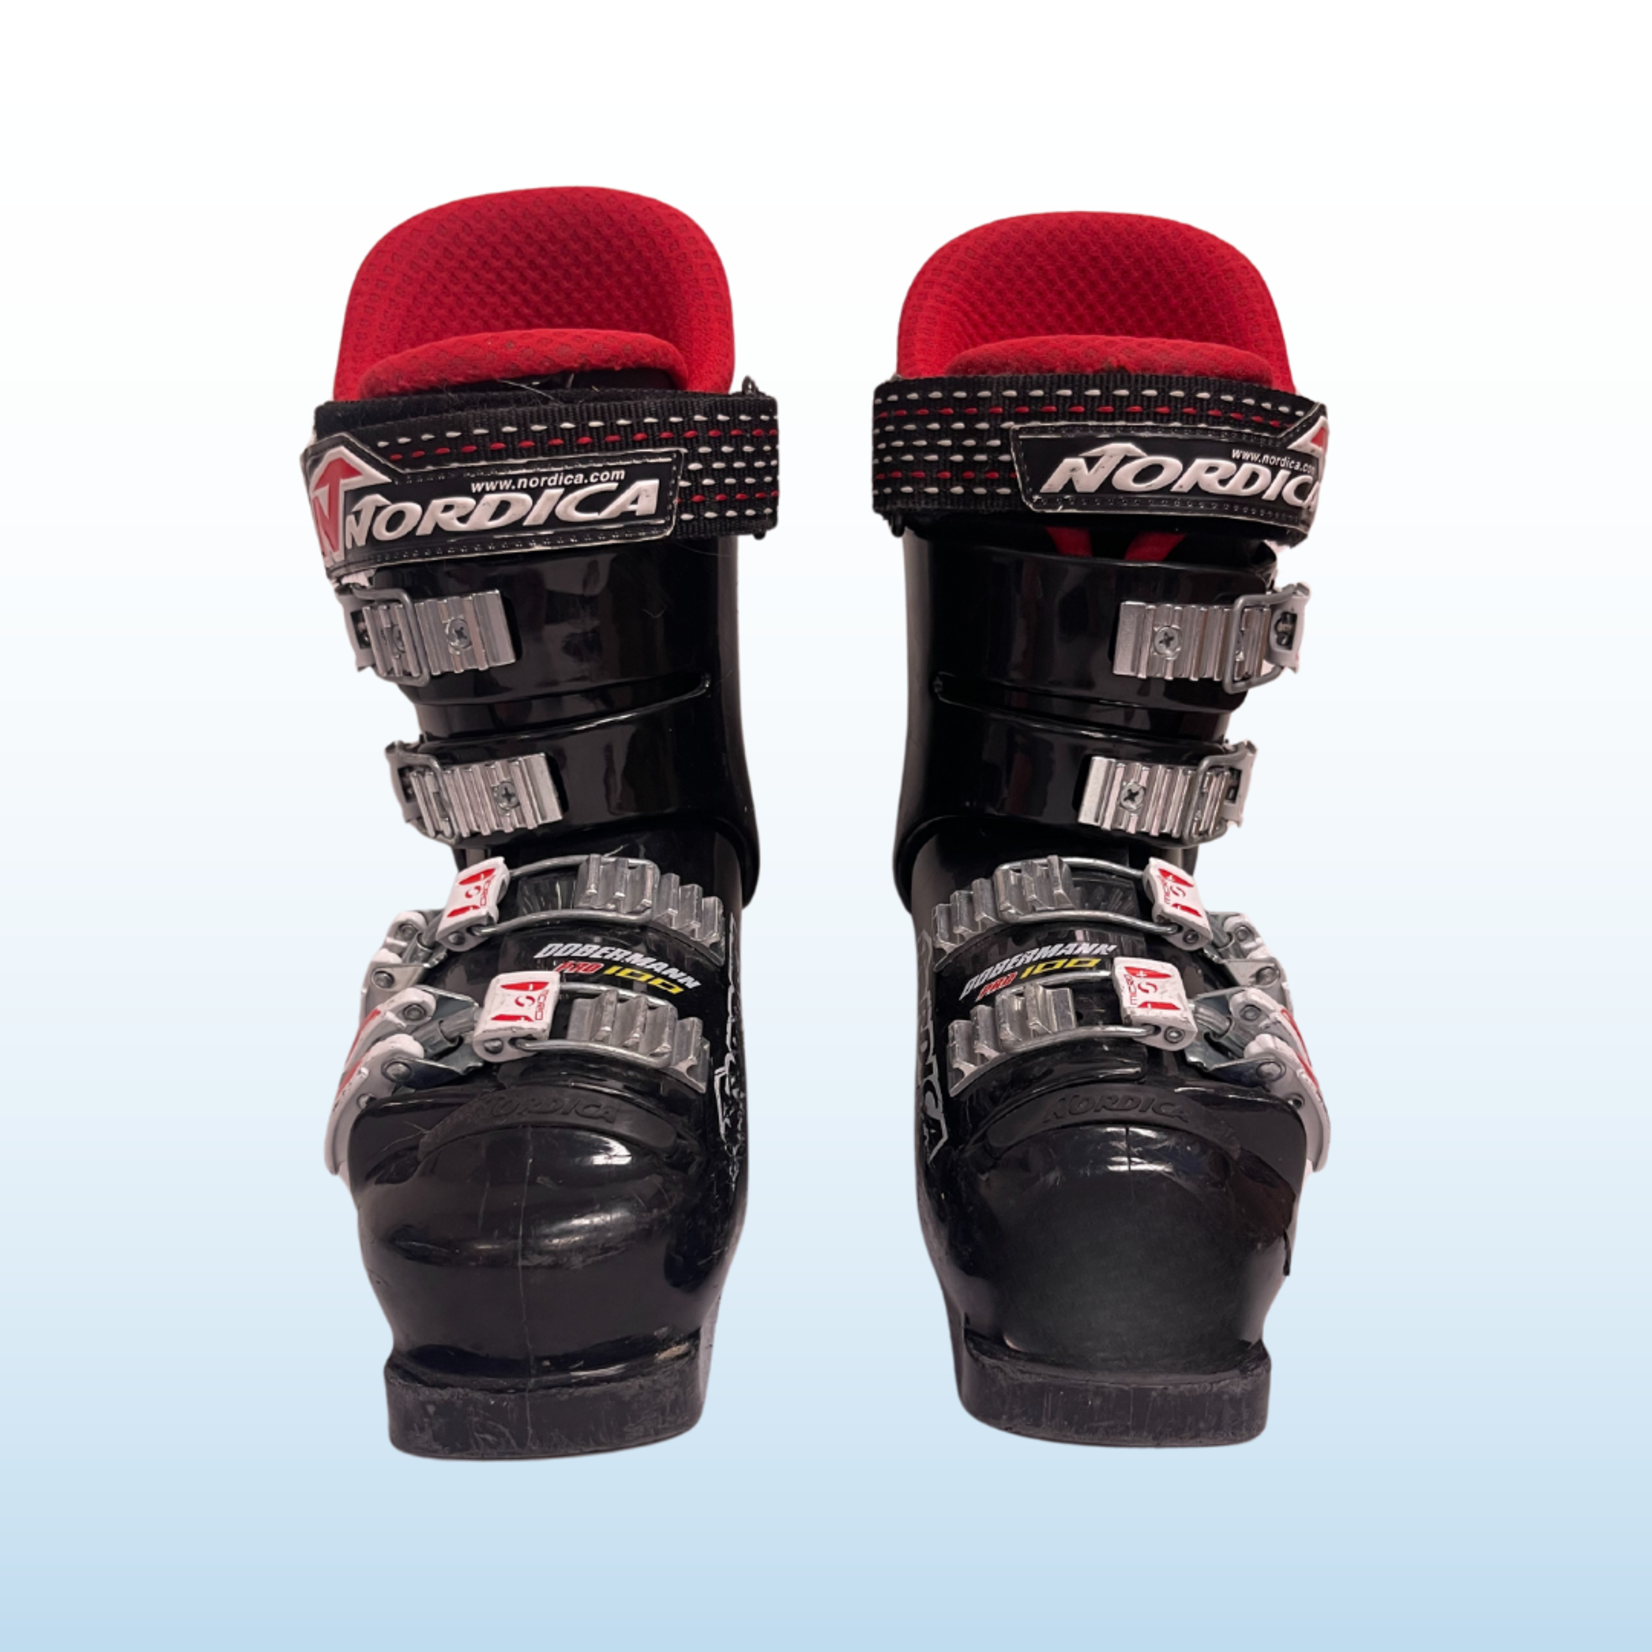 Nordica Nordica Doberman Kids Ski Boots Size 22/22.5